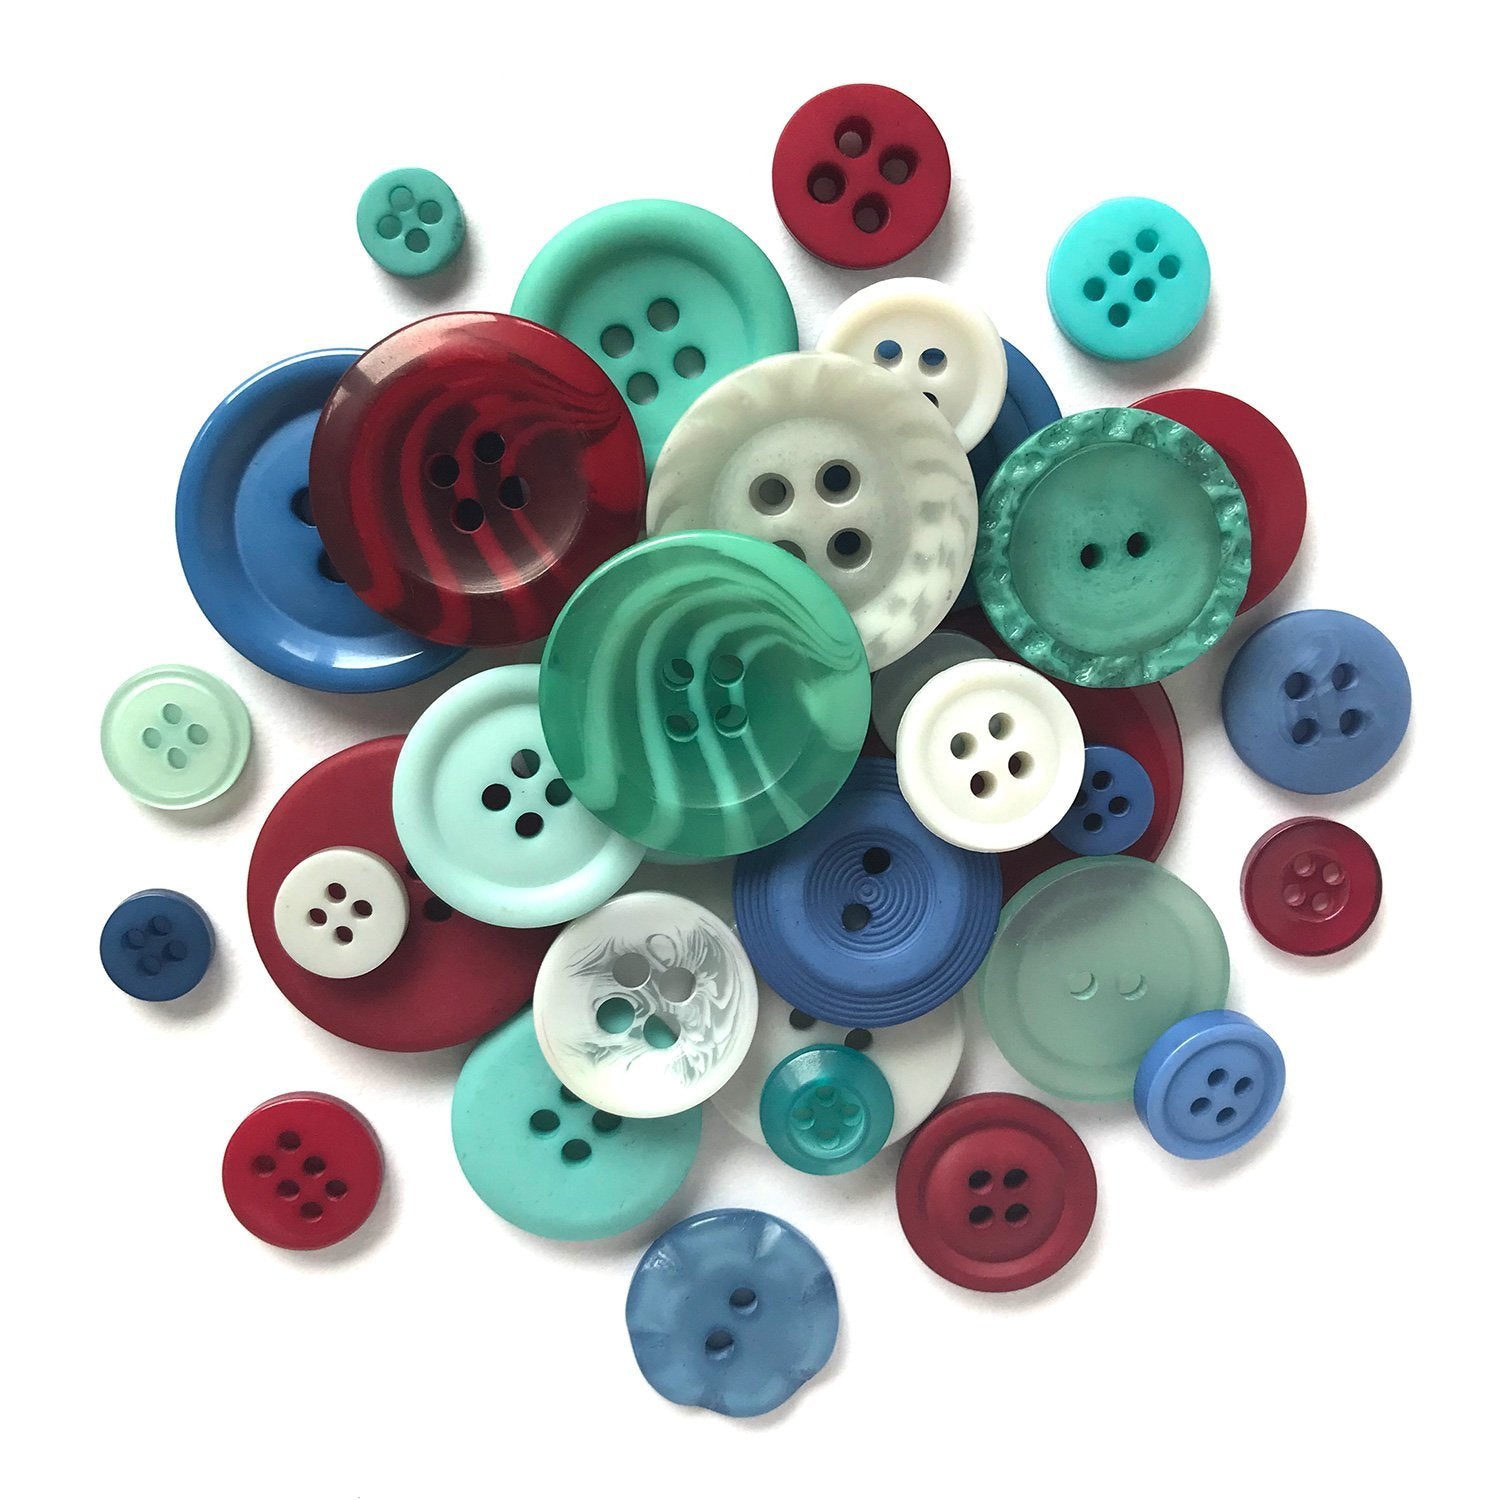 Buttons Galore & More Bonanza Novelty Buttons